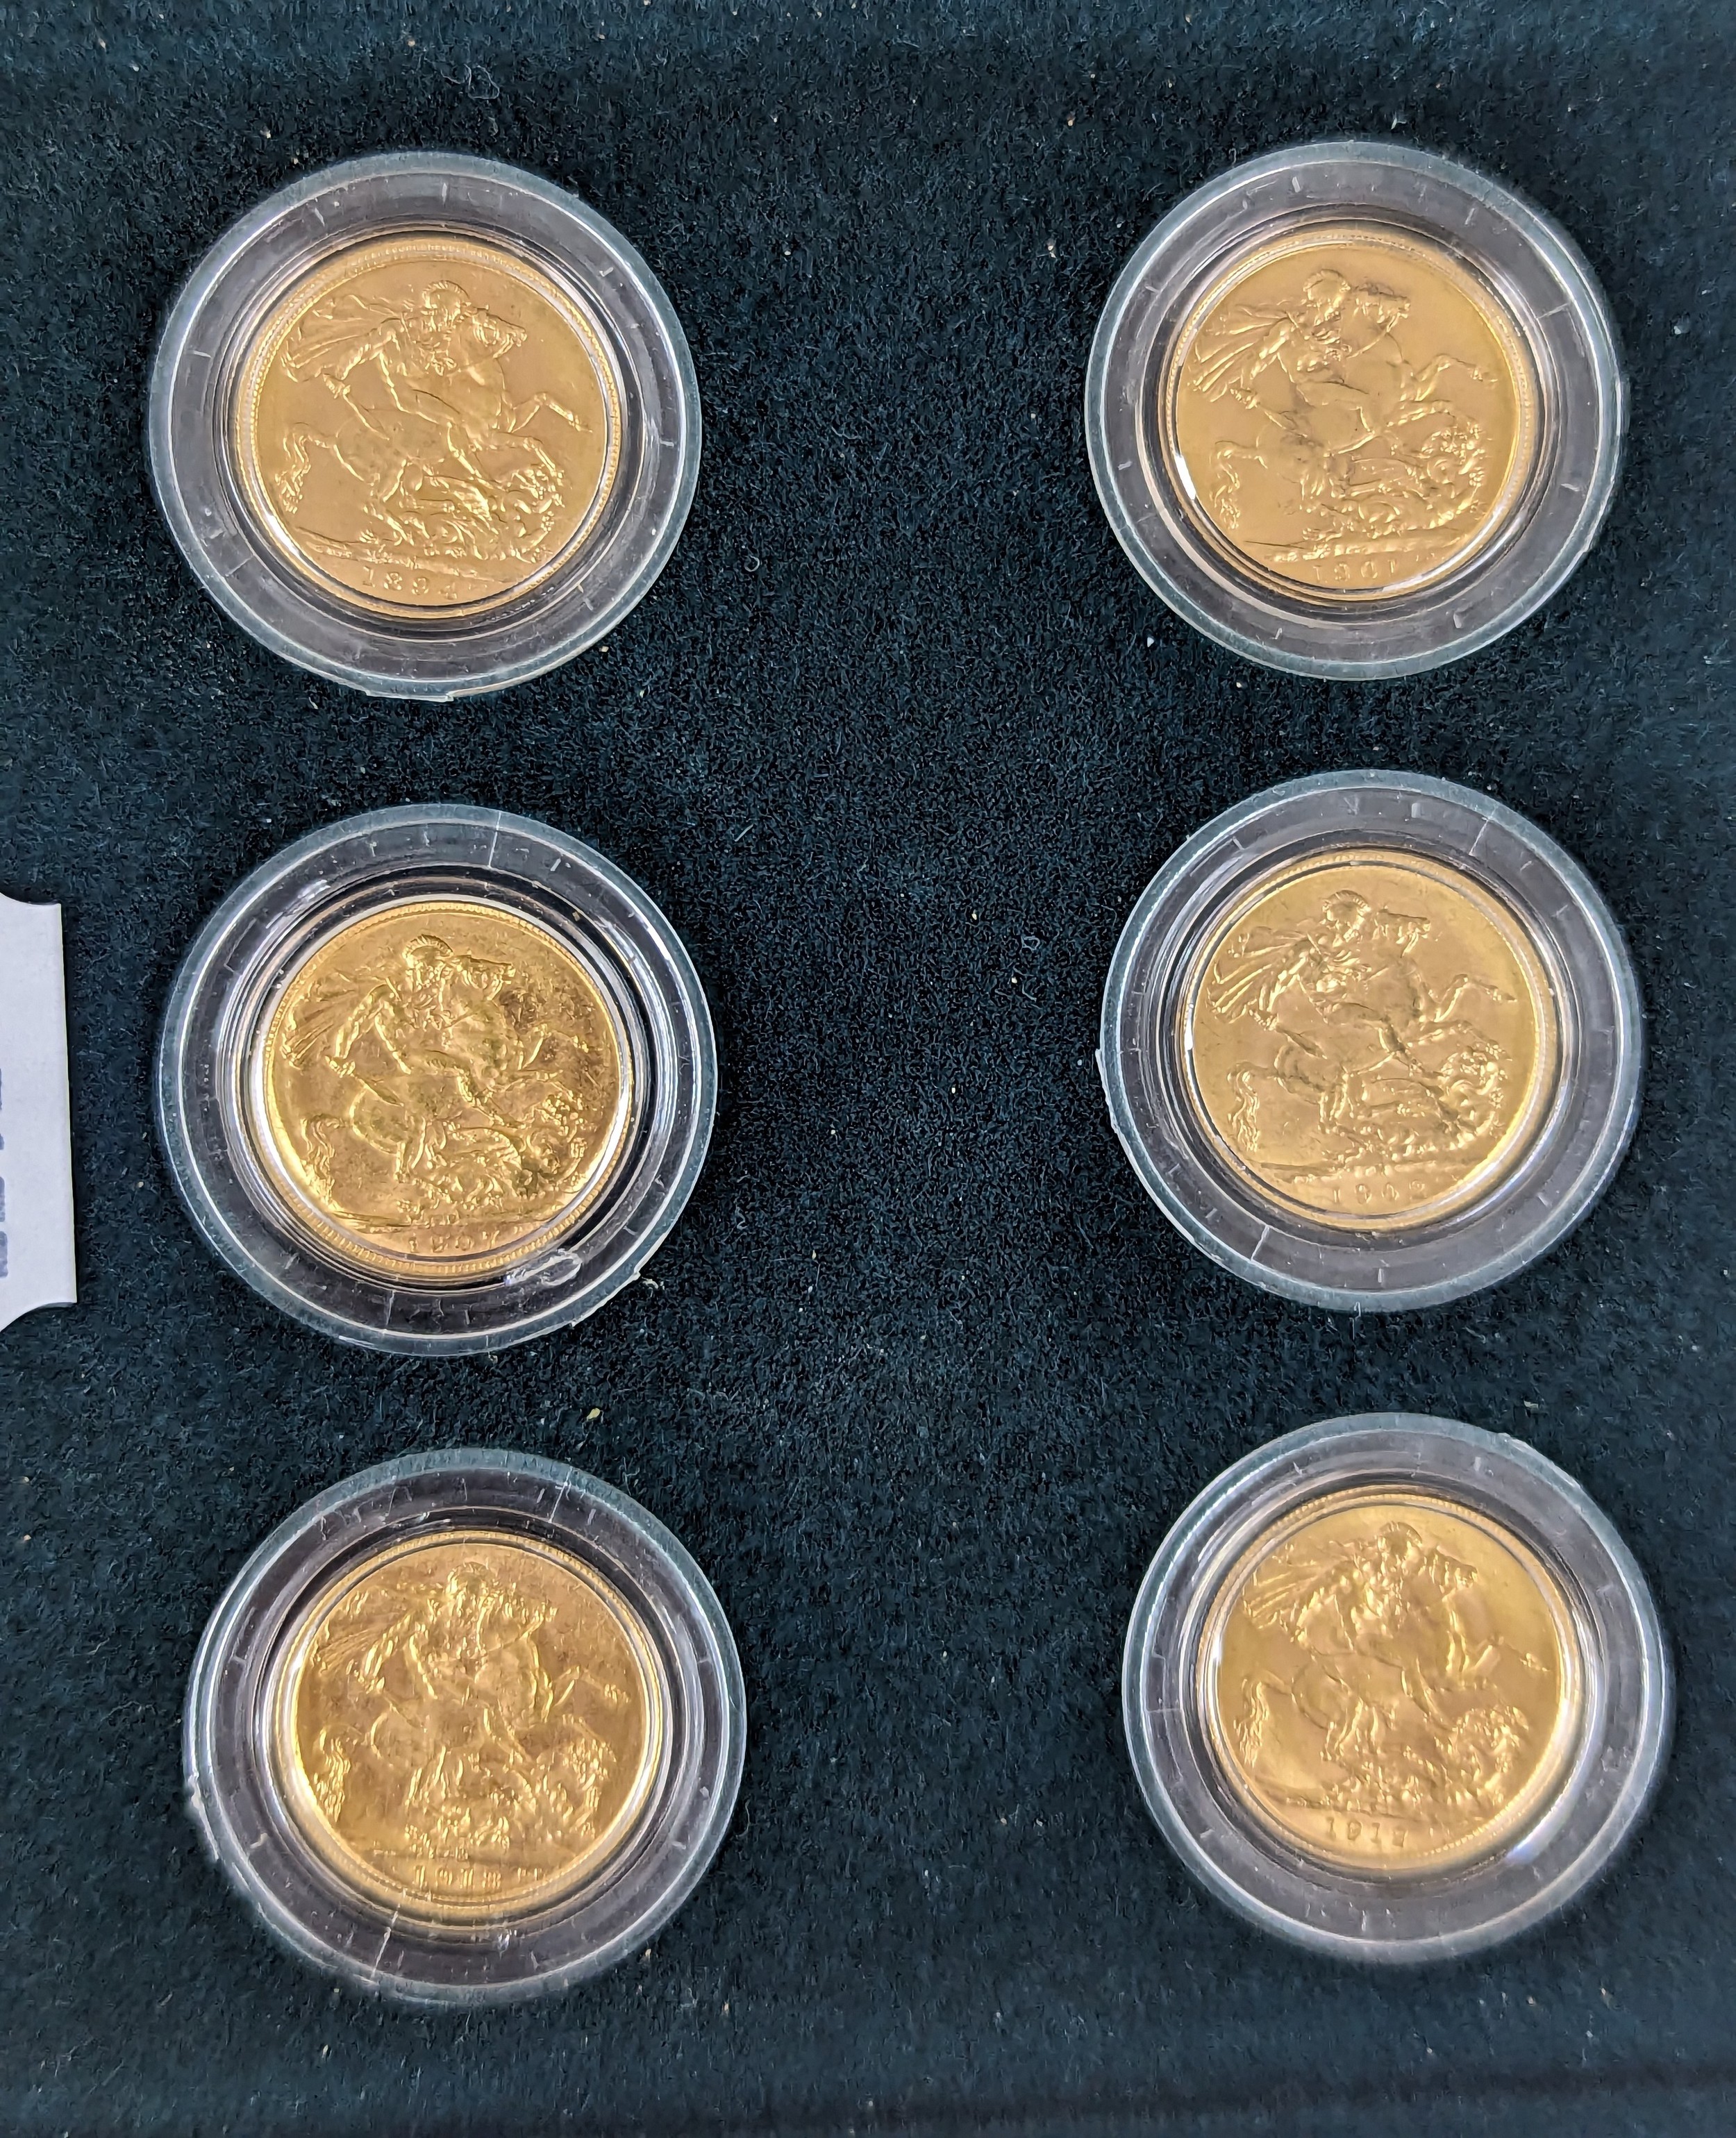 United Kingdom - British Gold Sovereigns (12) - Royal Mint ' Three Monarchs Mintmark Set', - Image 3 of 4